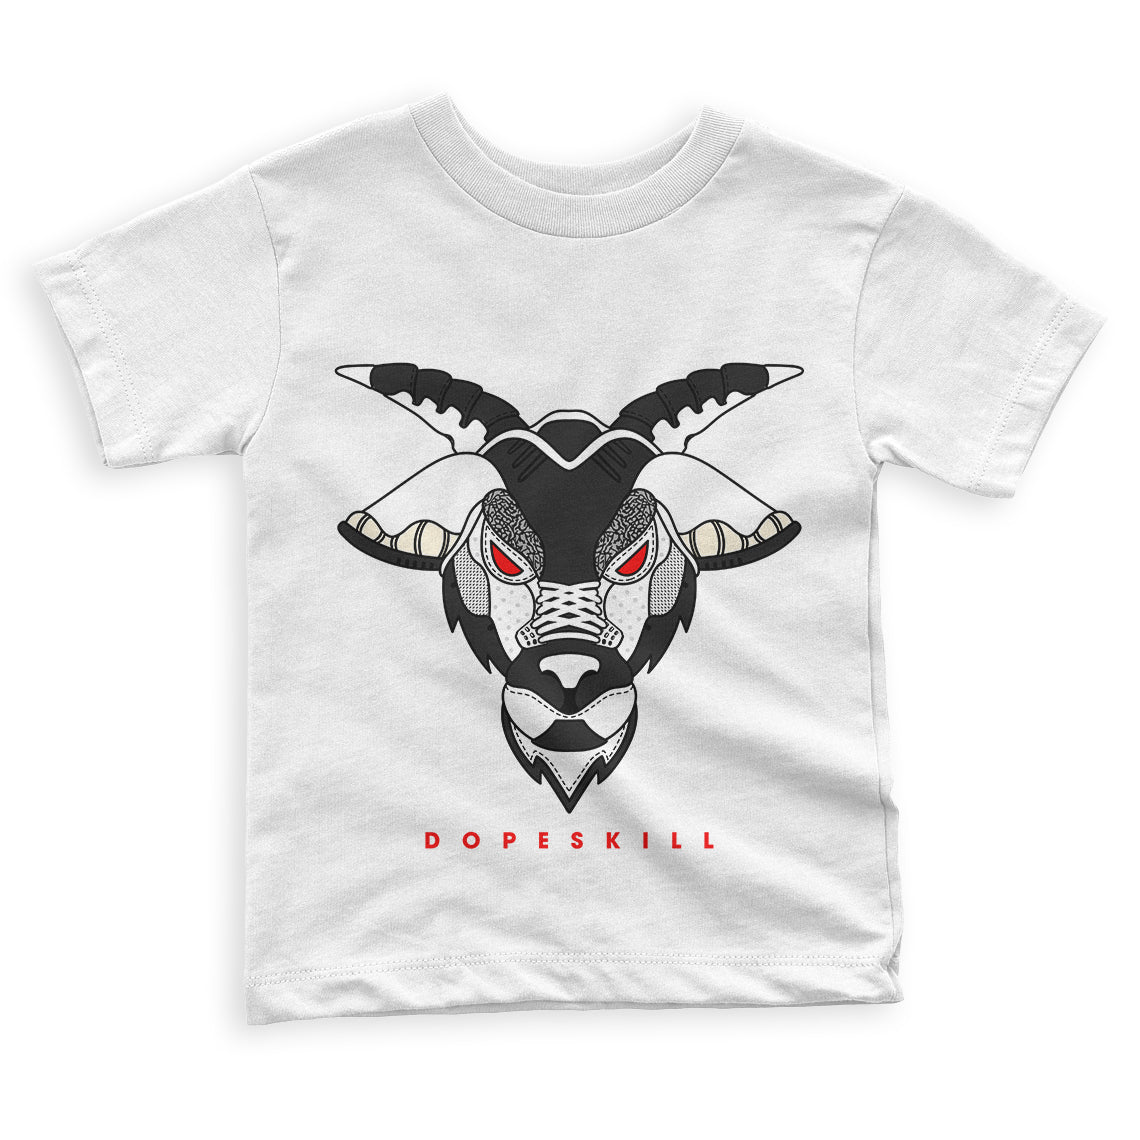 72-10 11s Retro Low DopeSkill Toddler Kids T-shirt Sneaker Goat Graphic - White